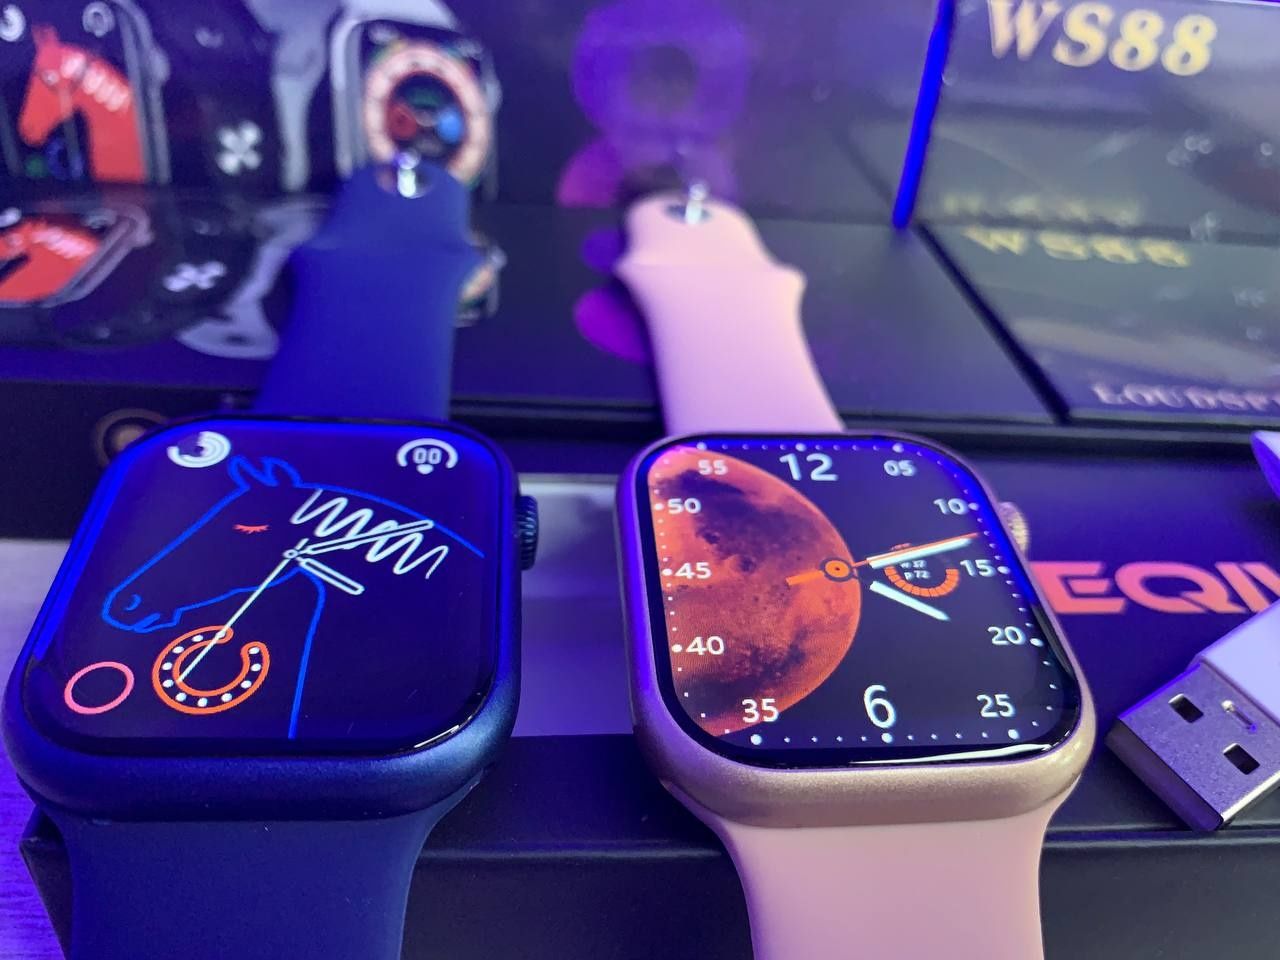 Smart watch iwatch WS88